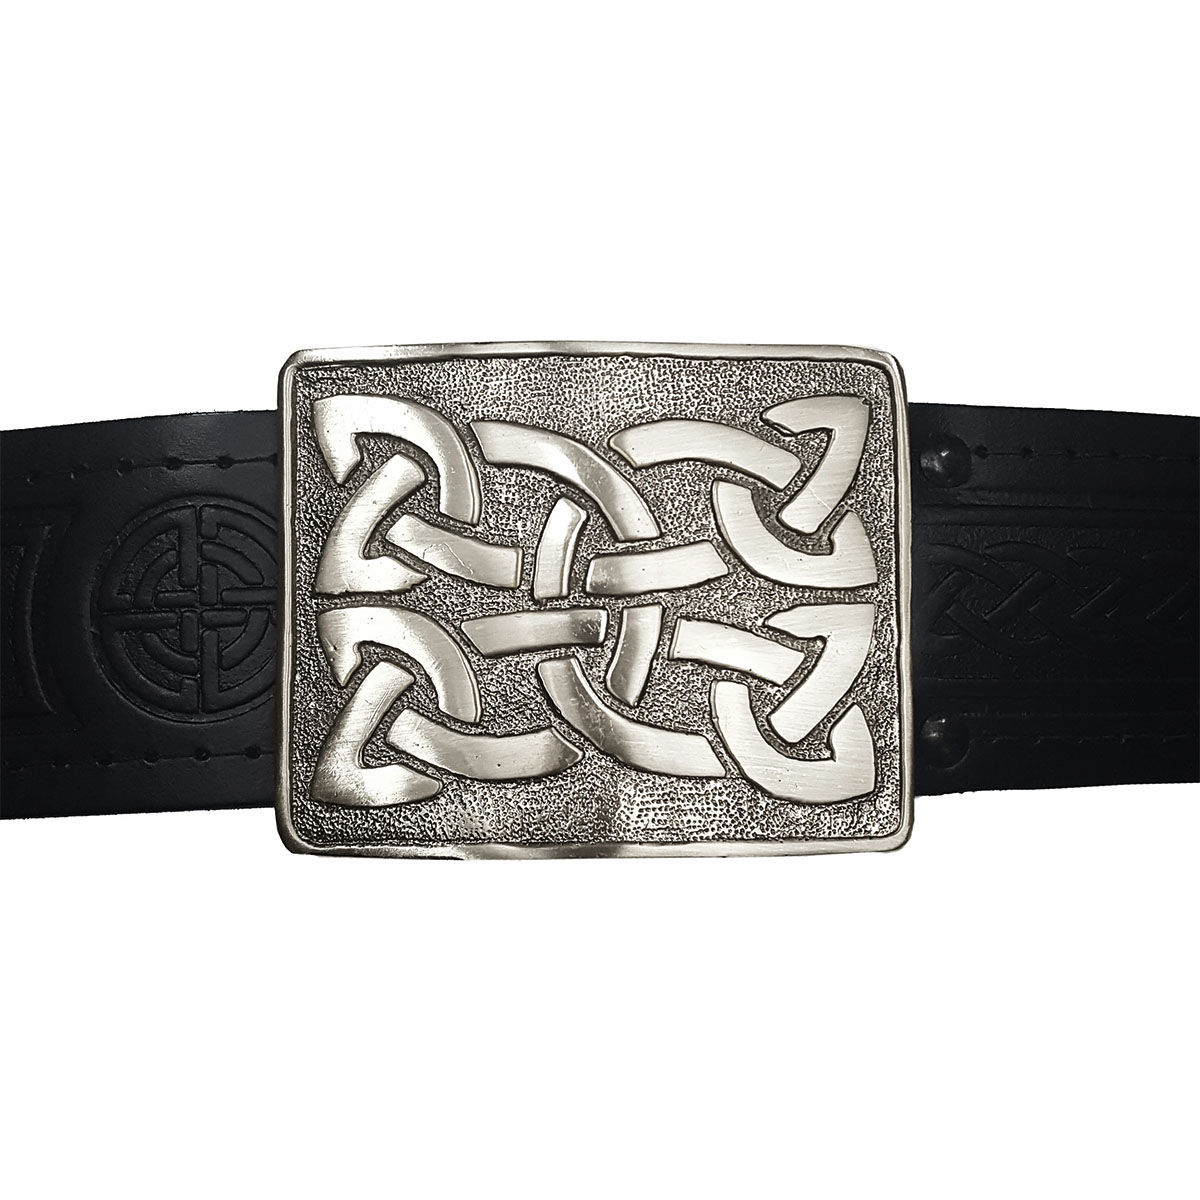 TE Celtic Knot Kilt Belt Buckle Various Design Scottish Belts Buckles Antique 